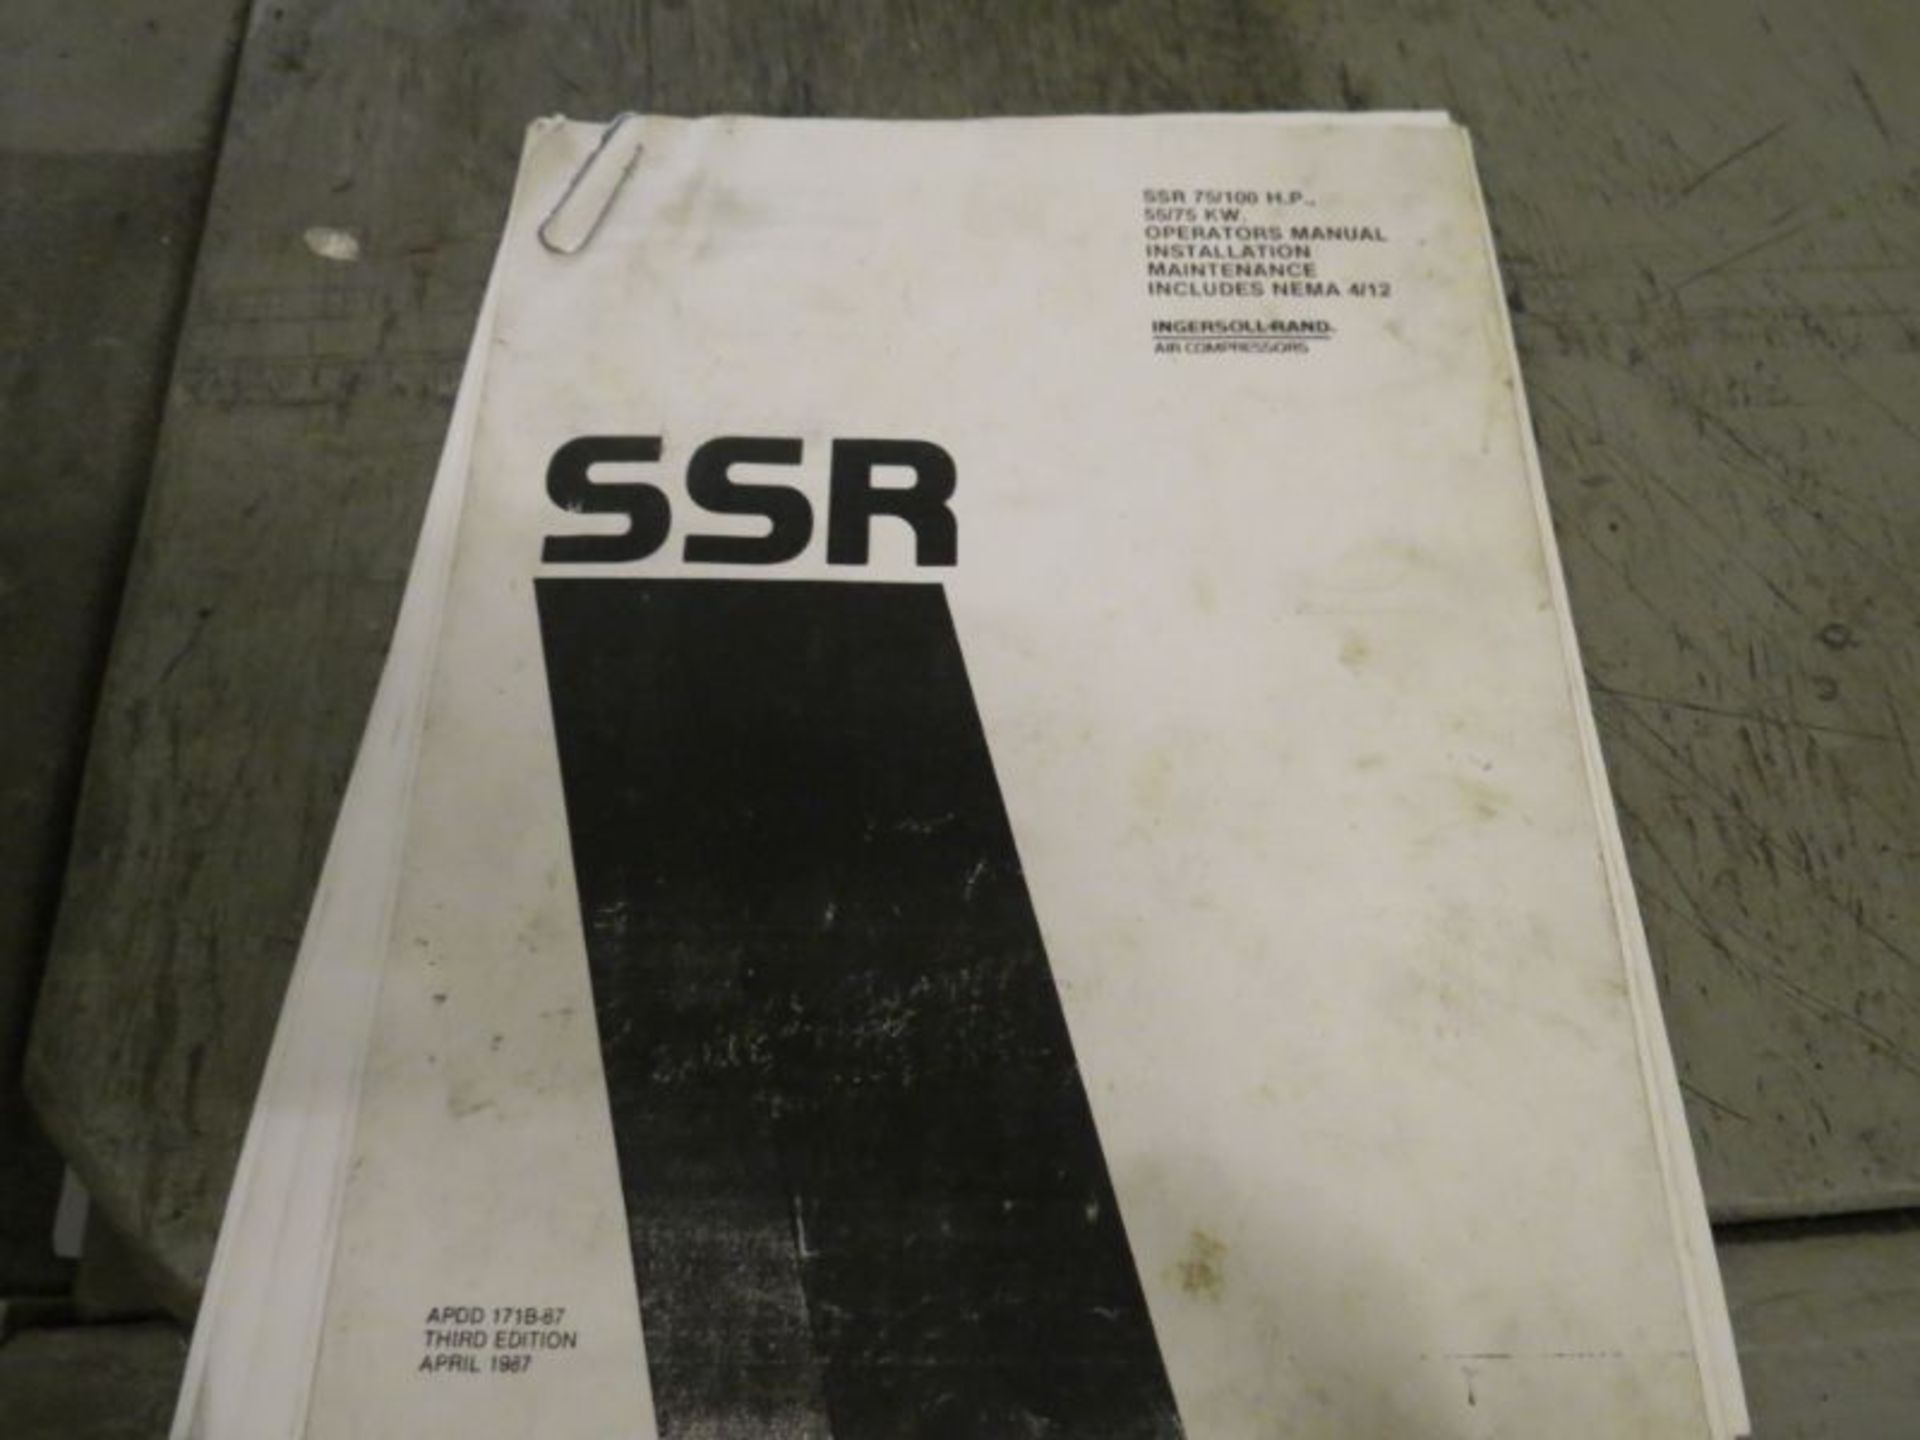 Ingersoll Rand SSRXF 75 Air Compressor, 75HP, 1750 RPM, 49482 Hours, s/n D2218 U85A - Image 6 of 7